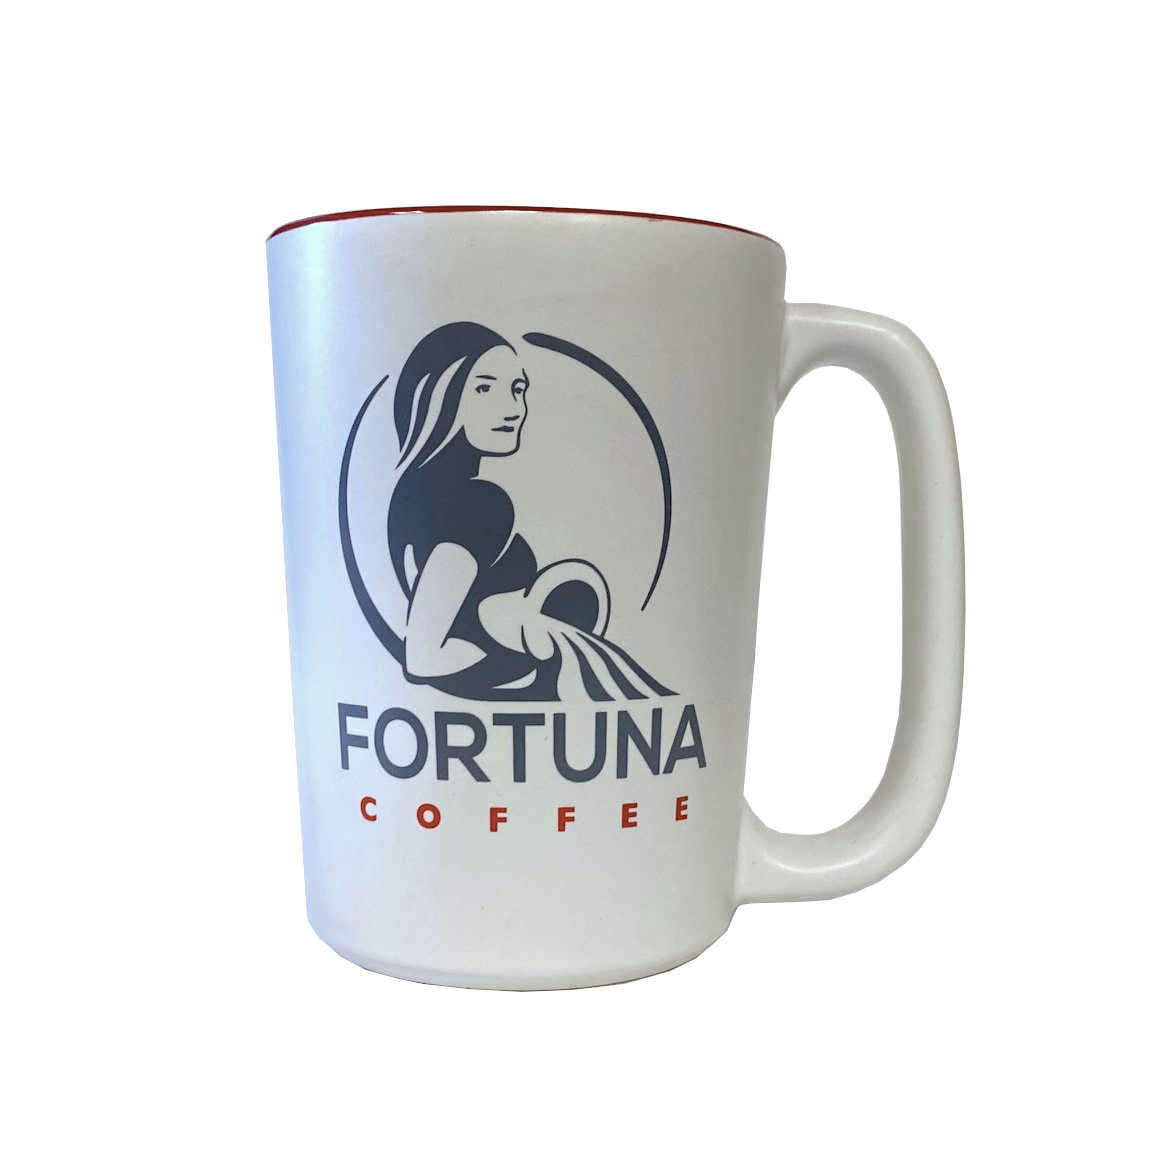 Fortuna Coffee Mug - Fortuna Coffee